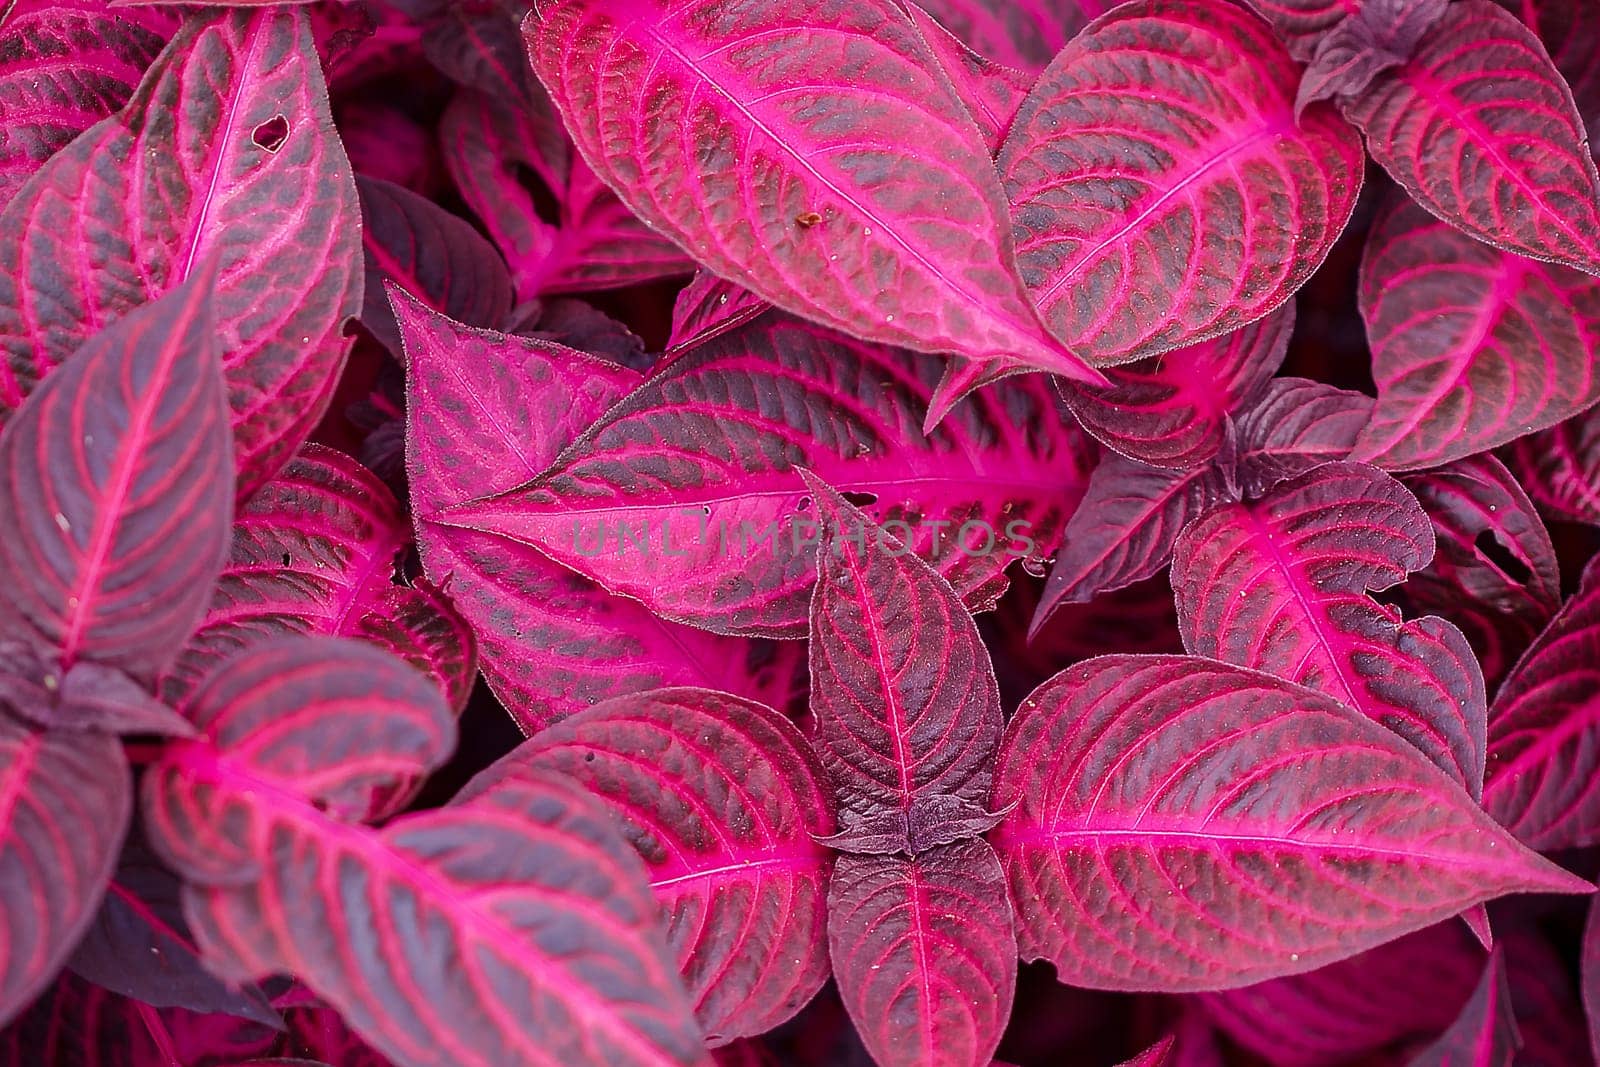 Iresine herbstii. The leaves are dark red, purple. by Puripatt